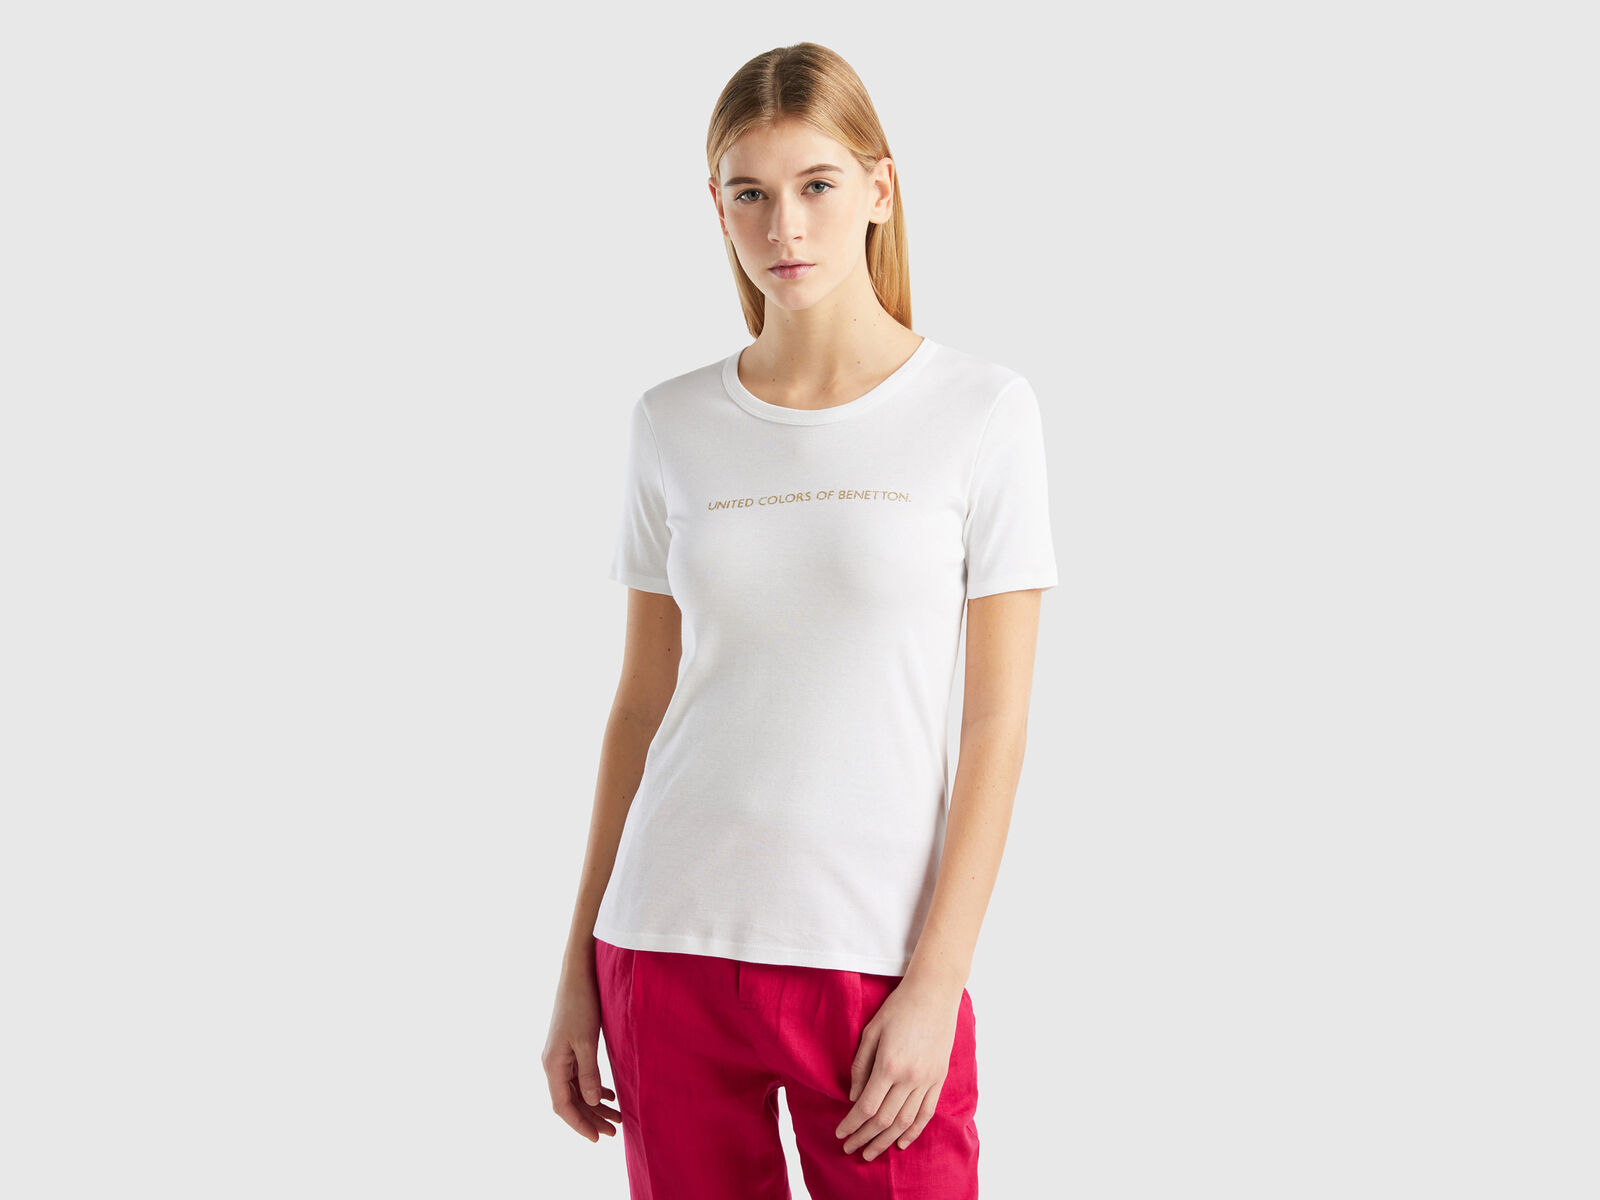 T-shirt in 100% print Benetton with - White | cotton logo glitter